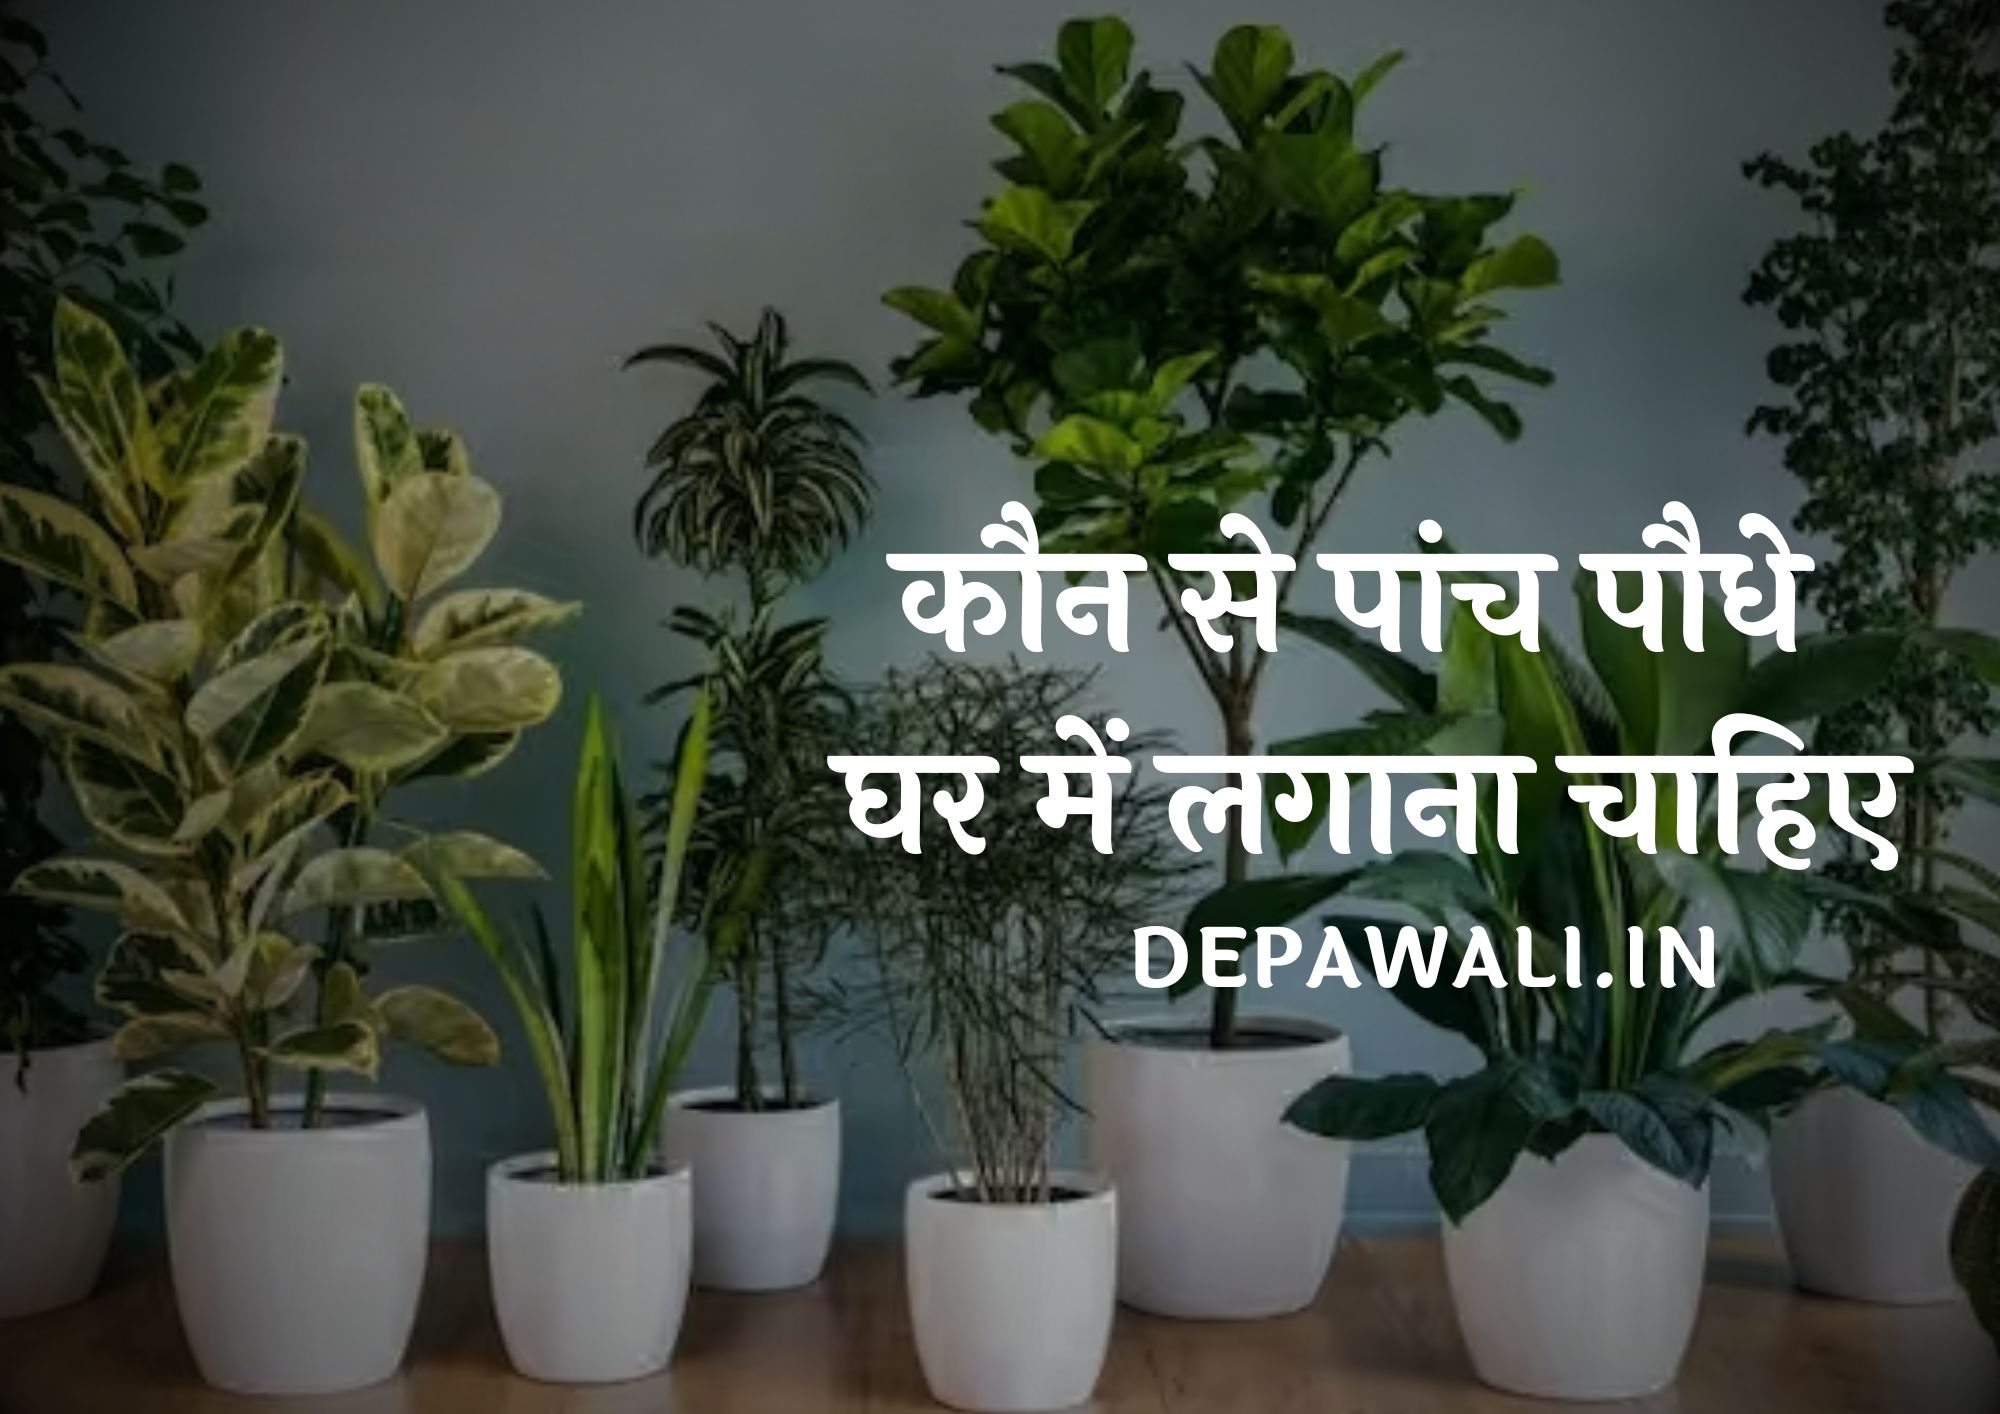 कौन से पांच पौधे घर में लगाना चाहिए (Kaun Se Panch Paudhe Ghar Me Lagana Chahiye)